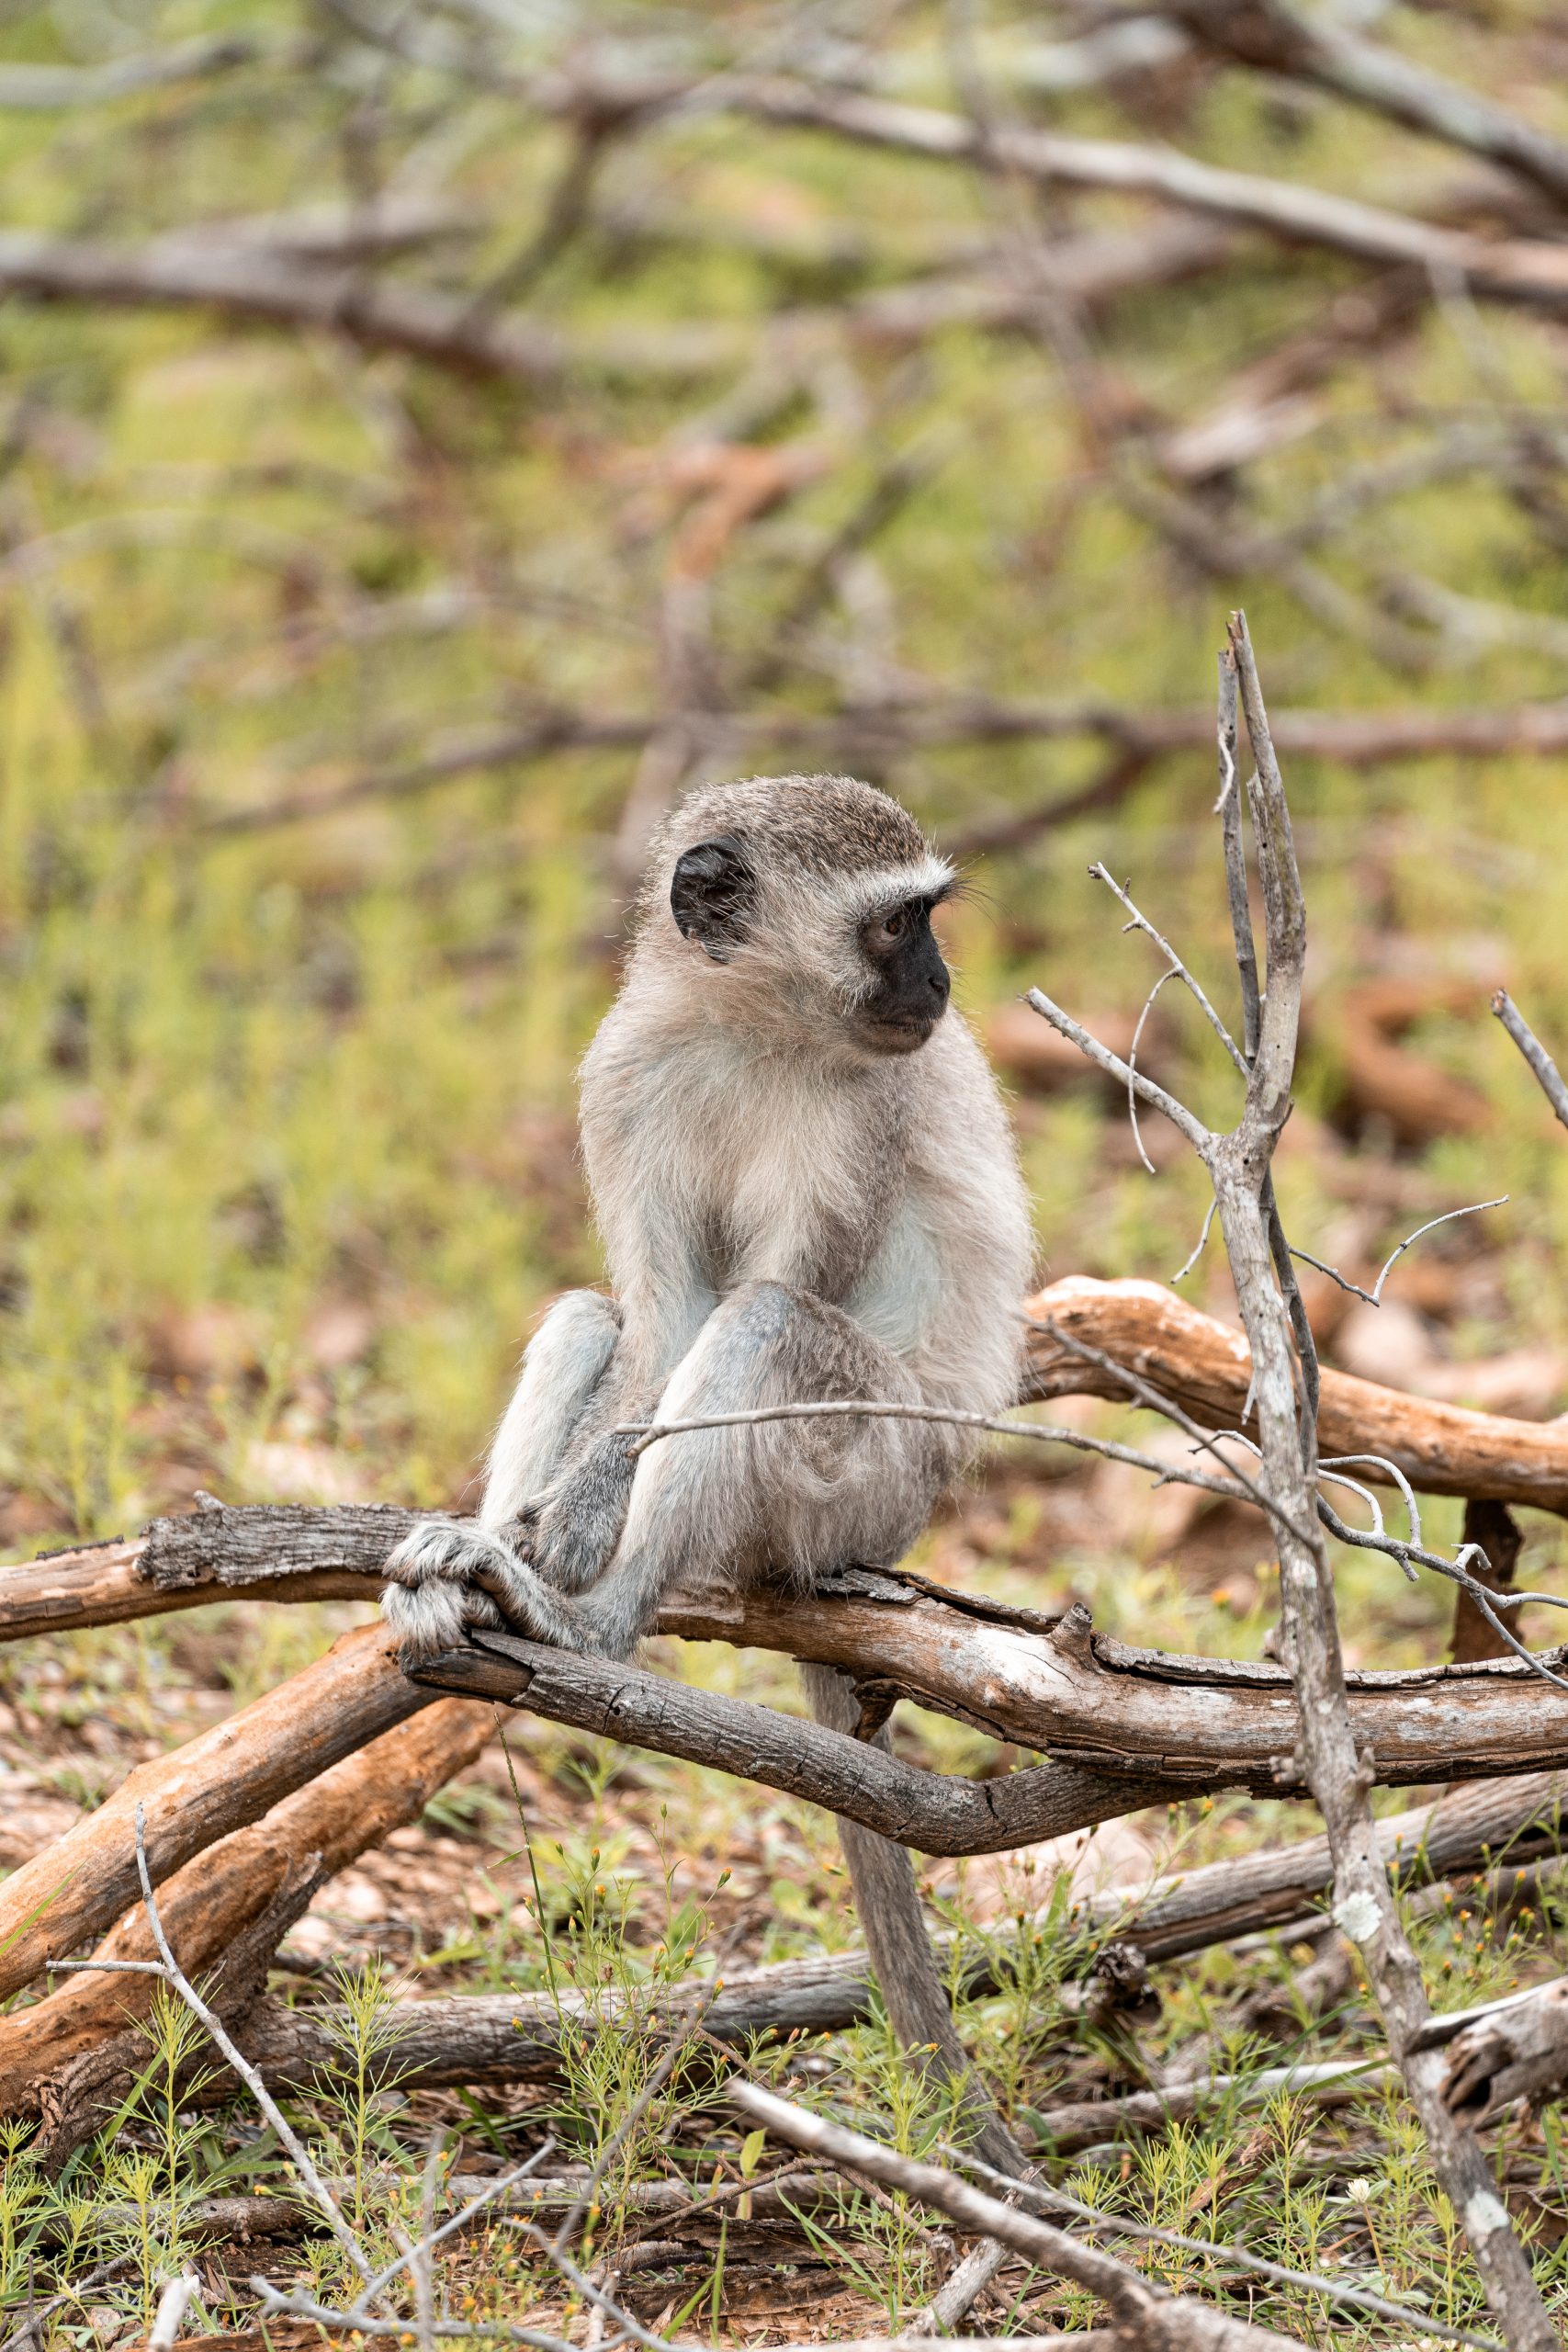 Monkey sitting on branches